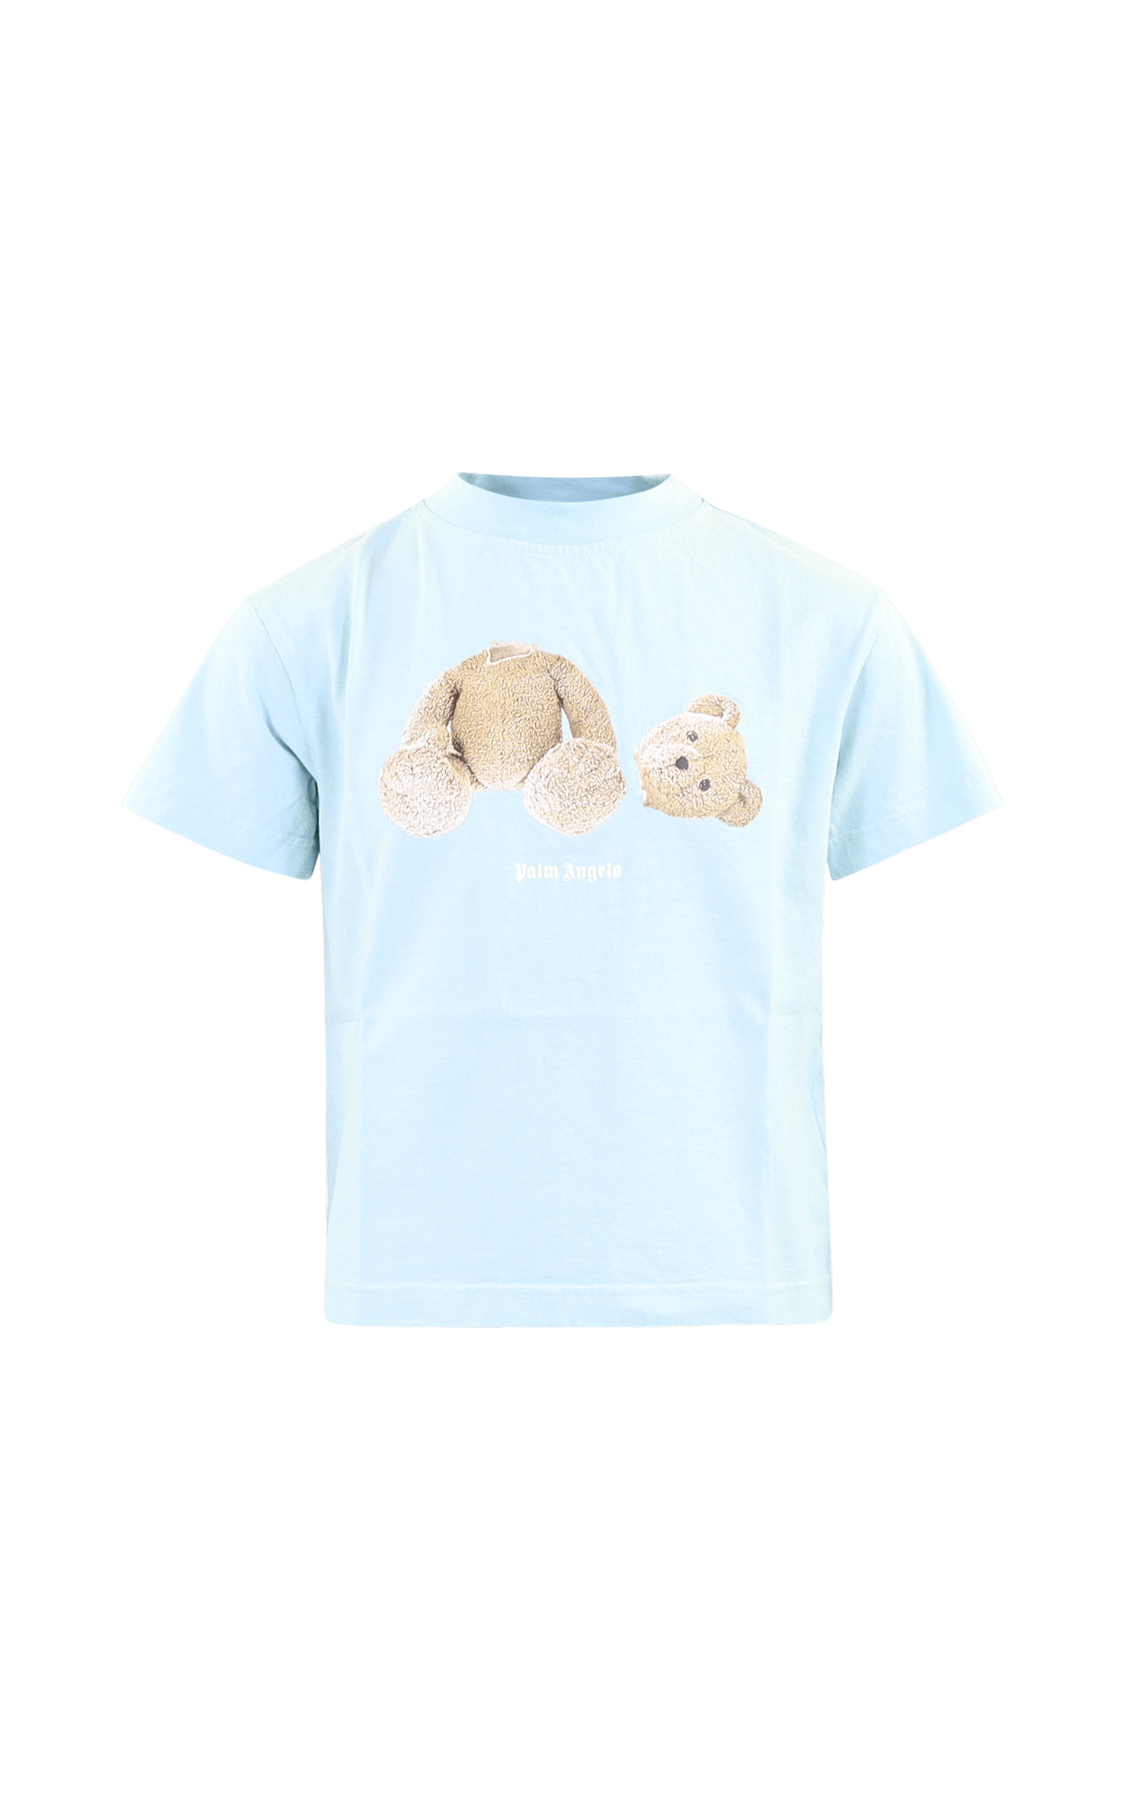 Kids Palm Angels Bear T-shirt S/S